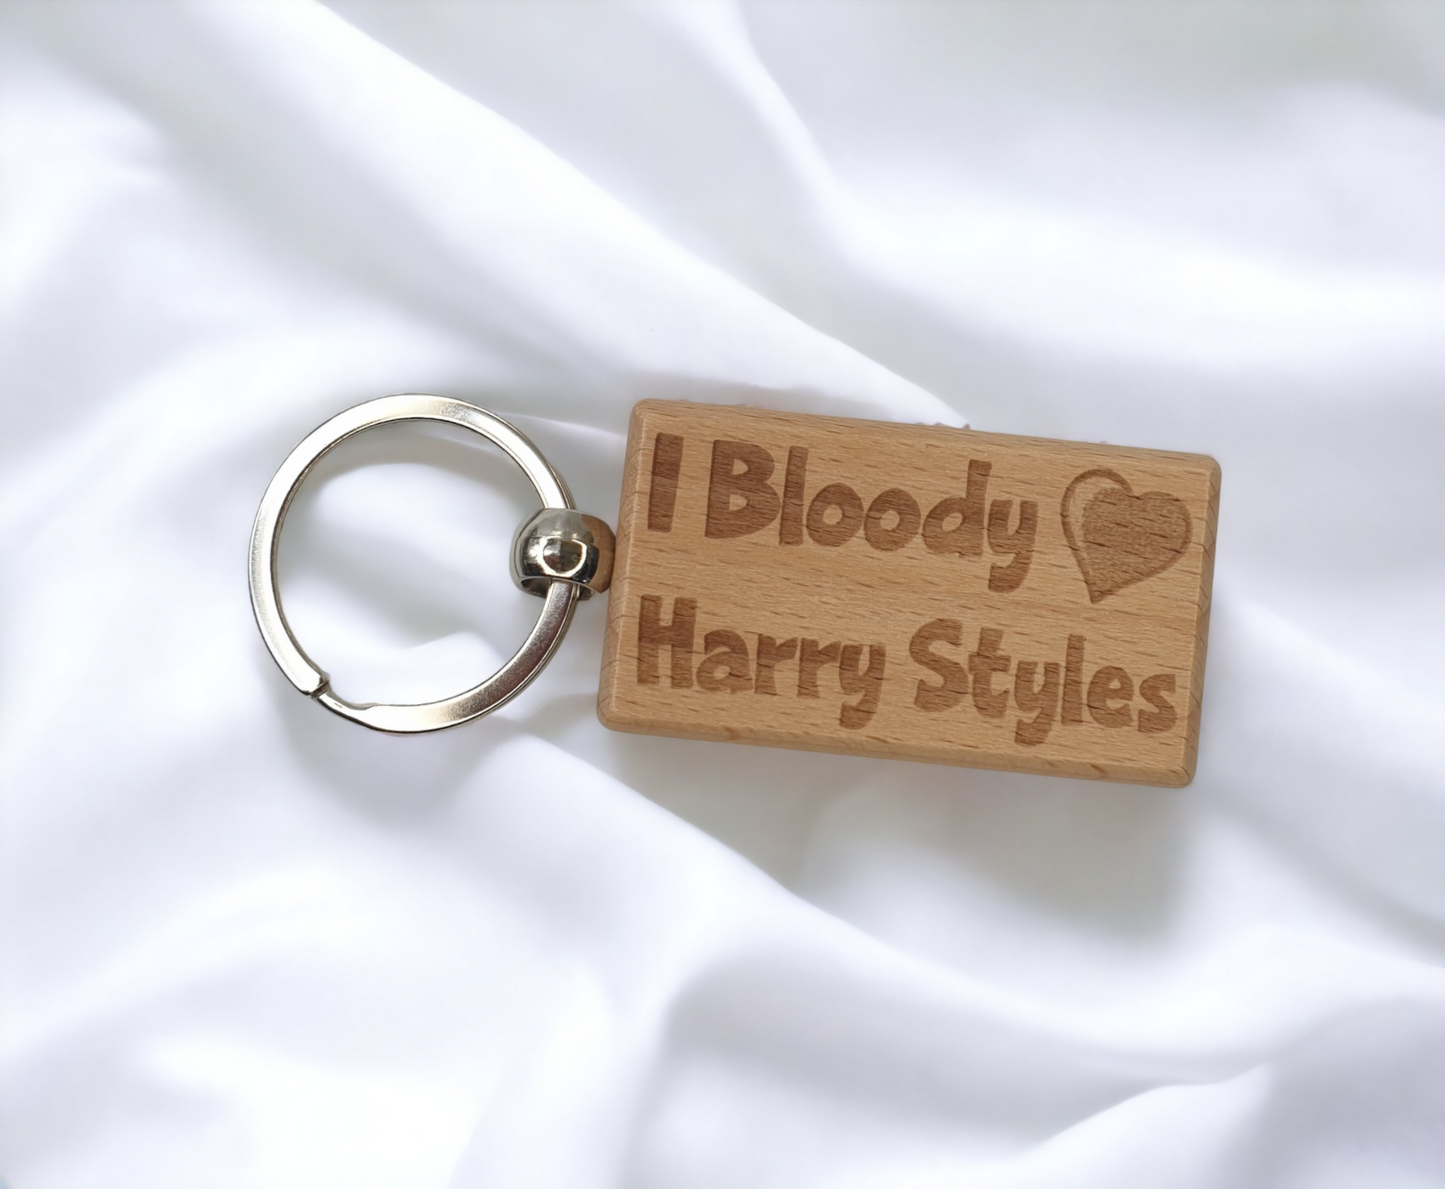 Harry Styles Keyring Gift - I Bloody Love Heart - Engraved Wooden Popstar Singer Fan Birthday Fun Cute Novelty Present